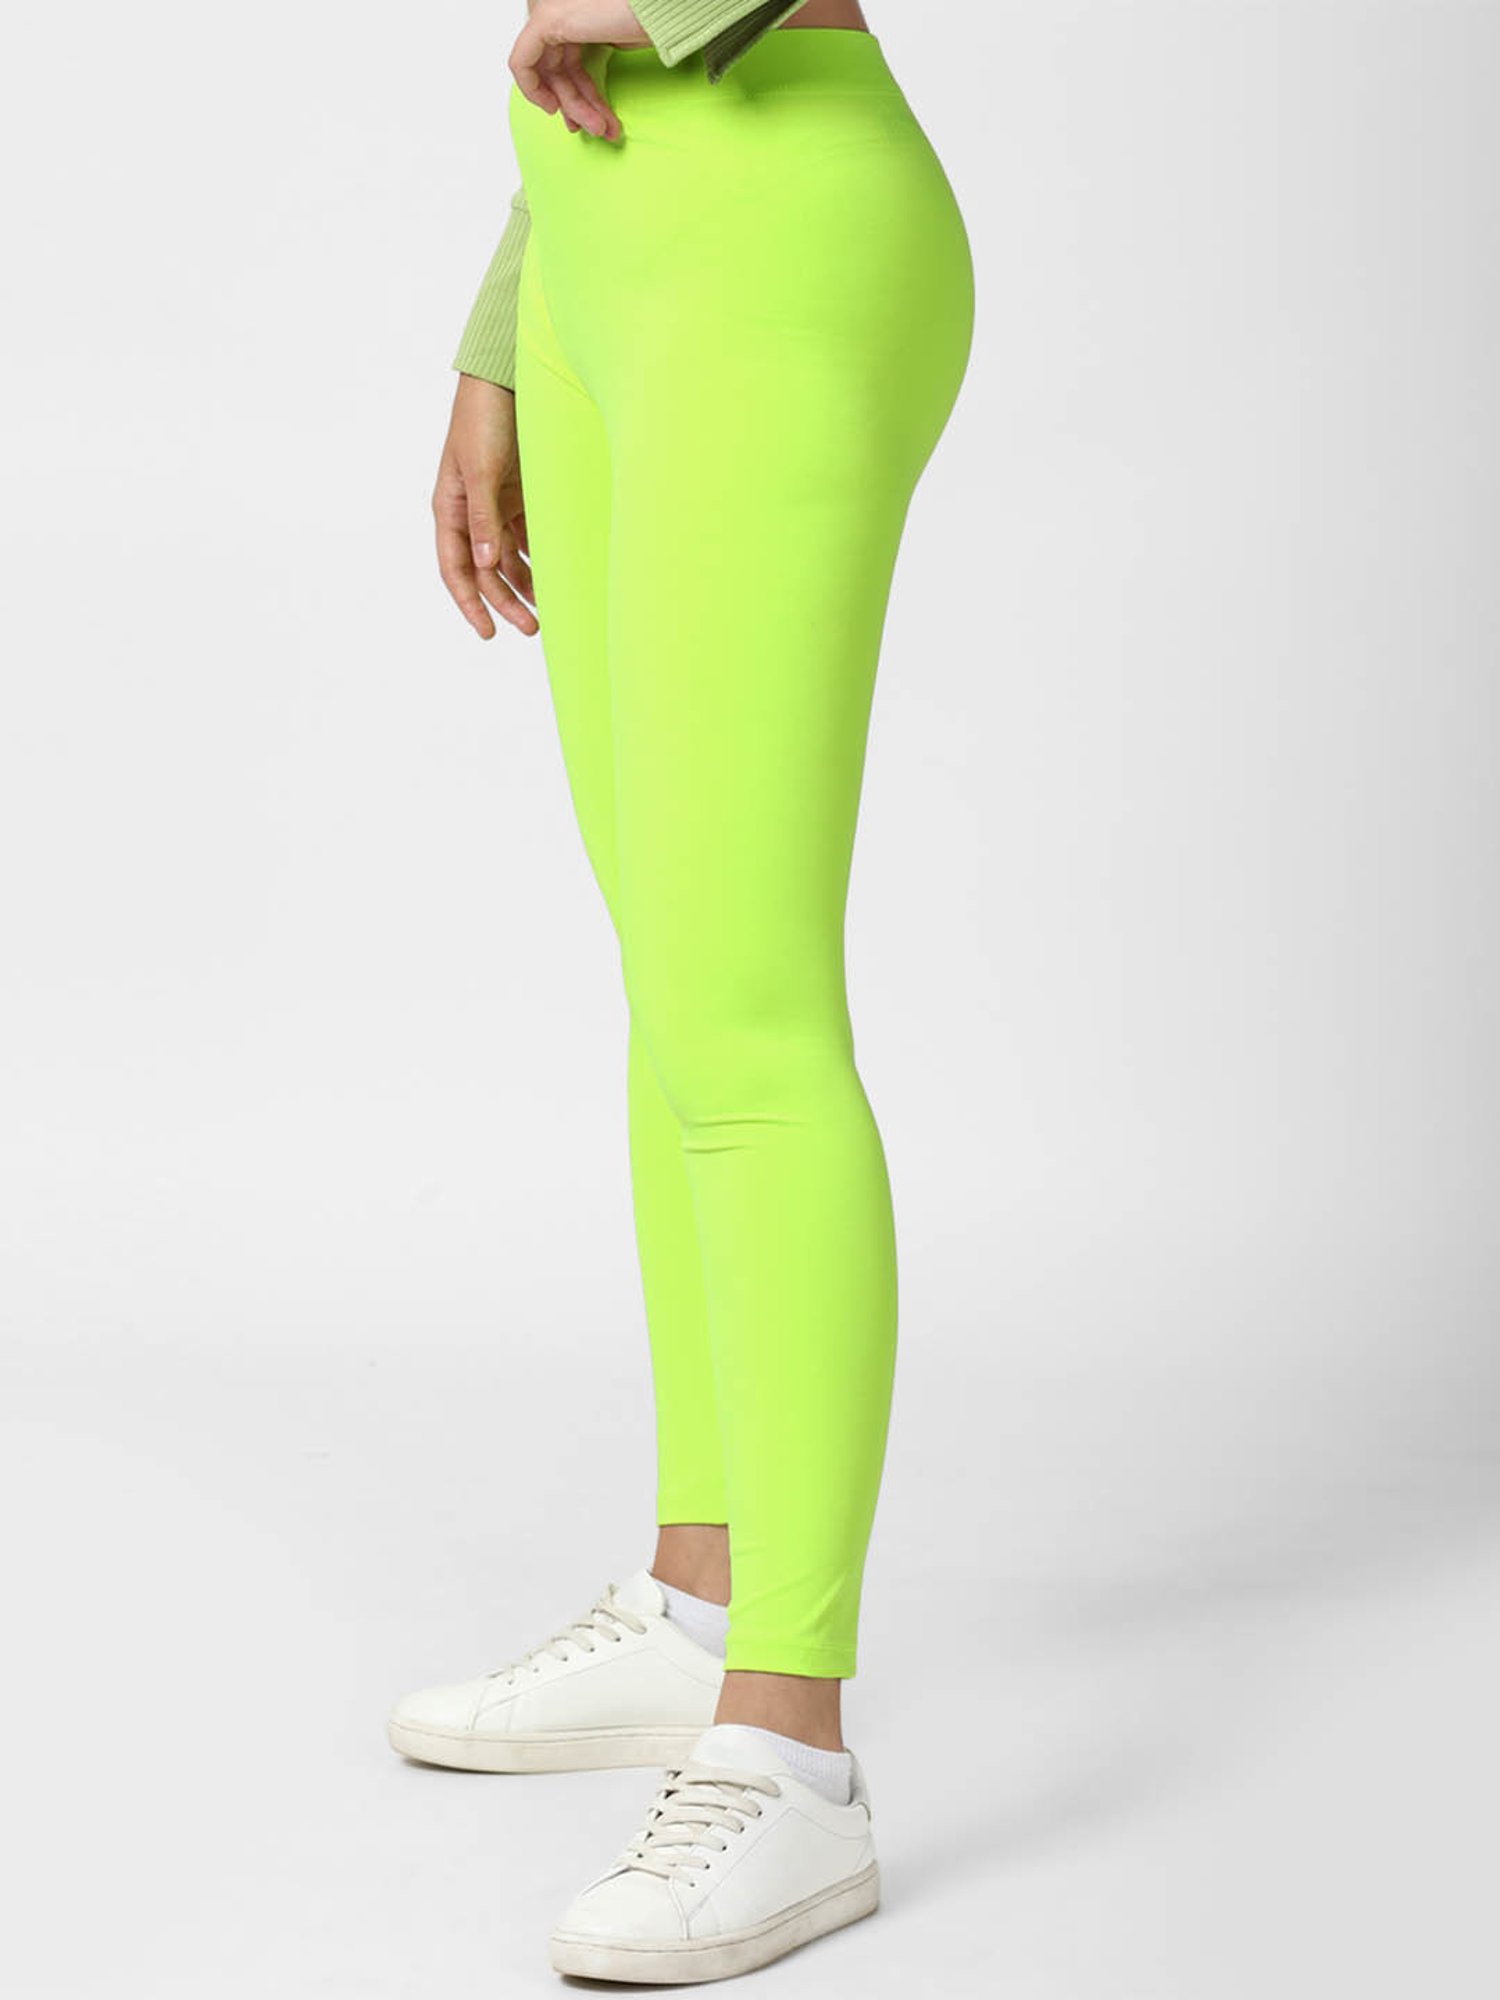 Black Green Striped Yoga Leggings, Bright Neon Green Women's Yoga Tights-Made  in USA/EU | Long yoga pants, Yoga leggings, Womens yoga leggings